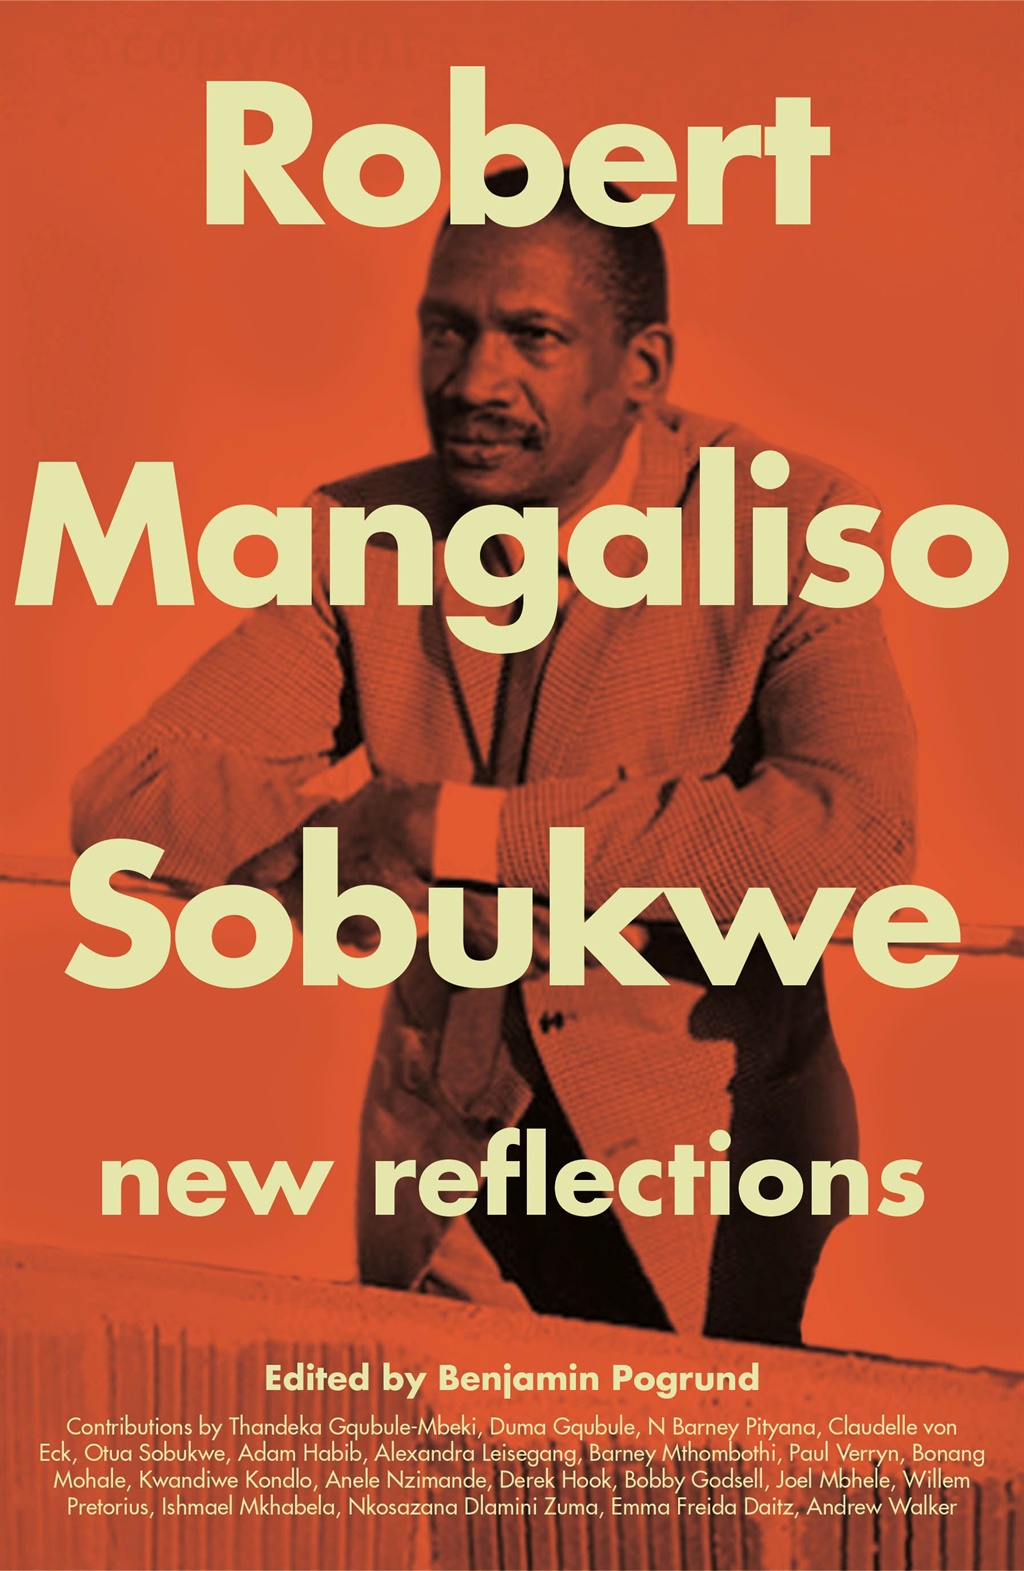 Robert Mangaliso Sobukwe. New reflections, edited by Benjamin Pogrund, published by Jonathan Ball